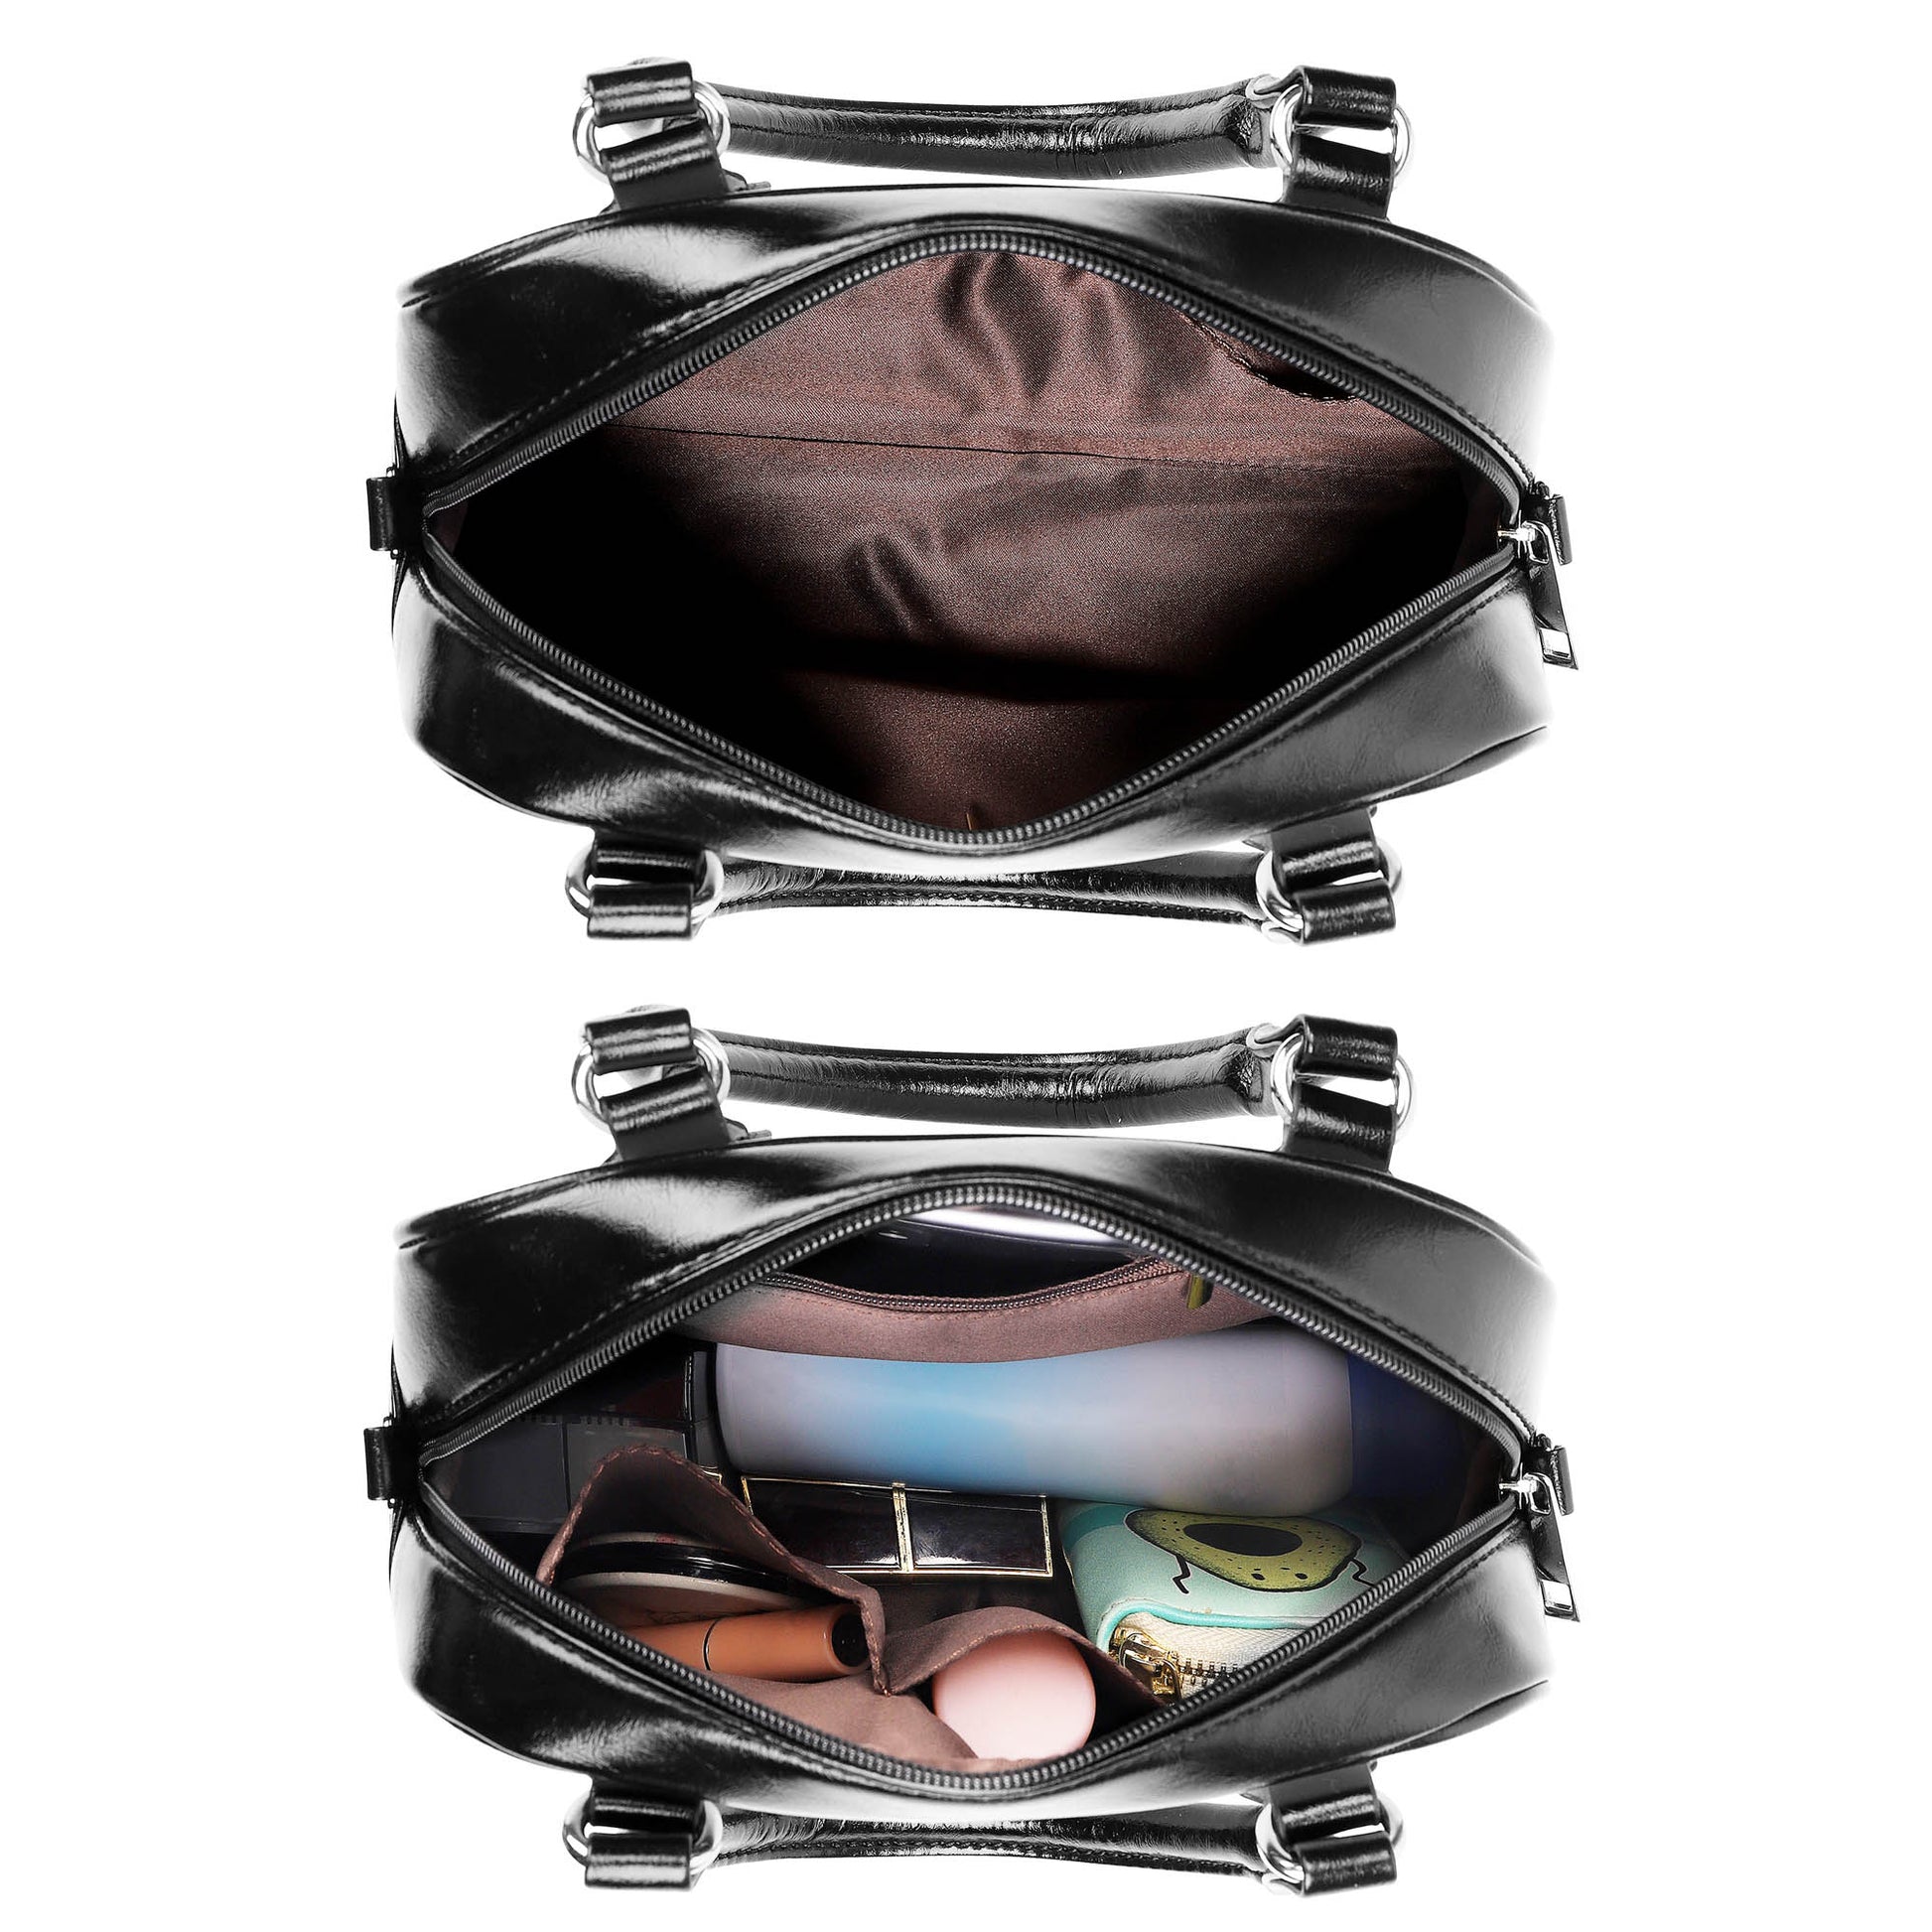 Fletcher Modern Tartan Shoulder Handbags with Family Crest - Tartanvibesclothing